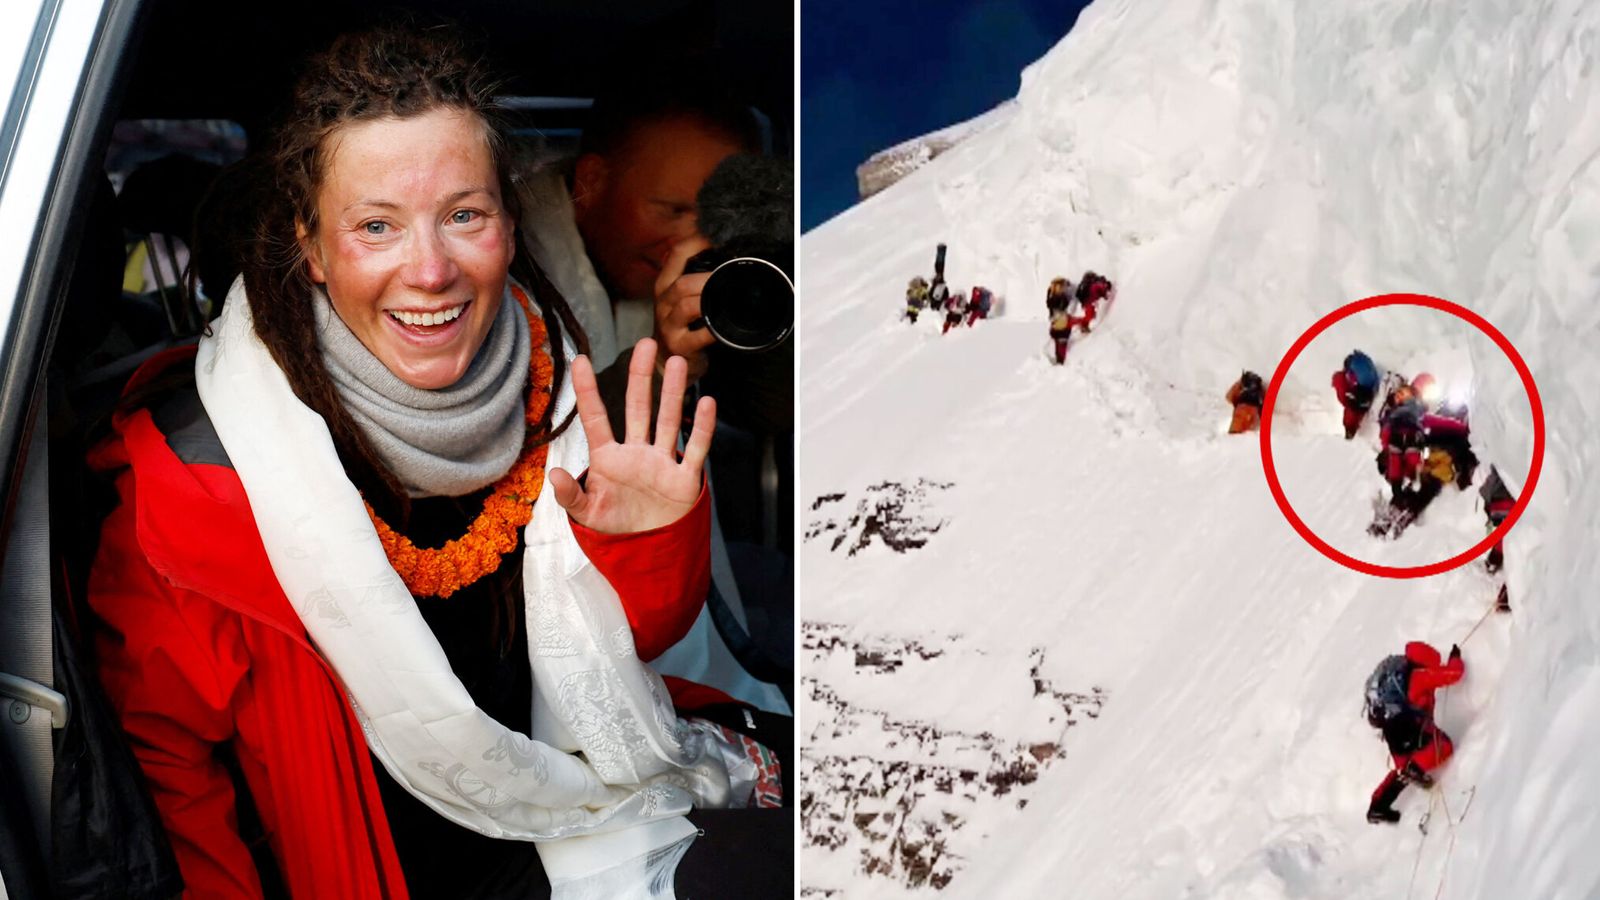 Norwegian mountaineer Kristin Harila denies group stepped over dying porter during world record K2 climb